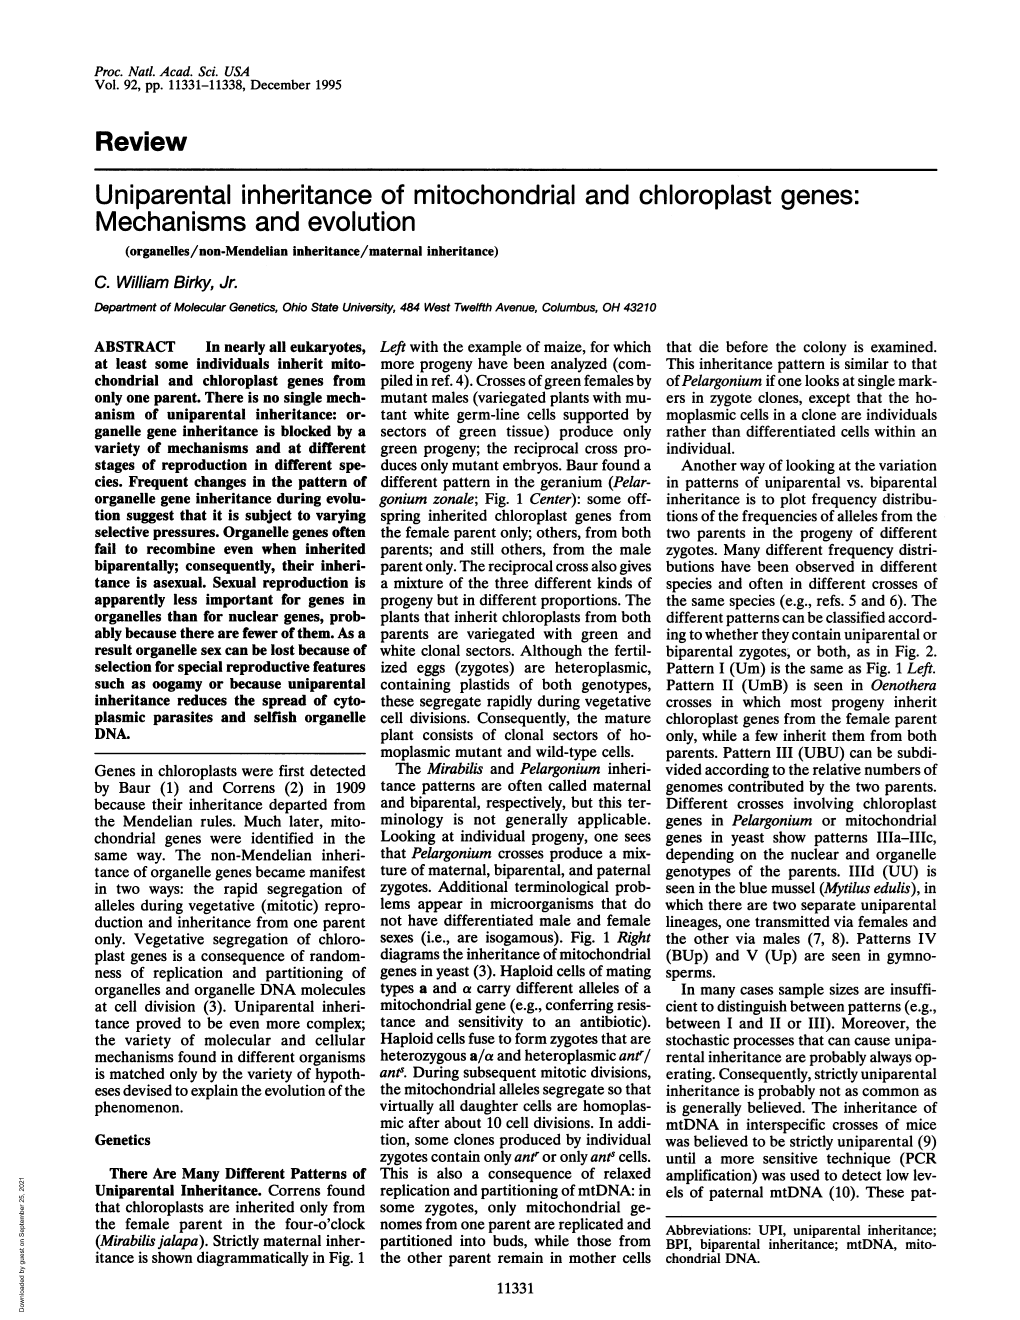 Review Uniparental Inheritance of Mitochondrial and Chloroplast Genes: Mechanisms and Evolution (Organelles/Non-Mendelian Inheritance/Maternal Inheritance) C